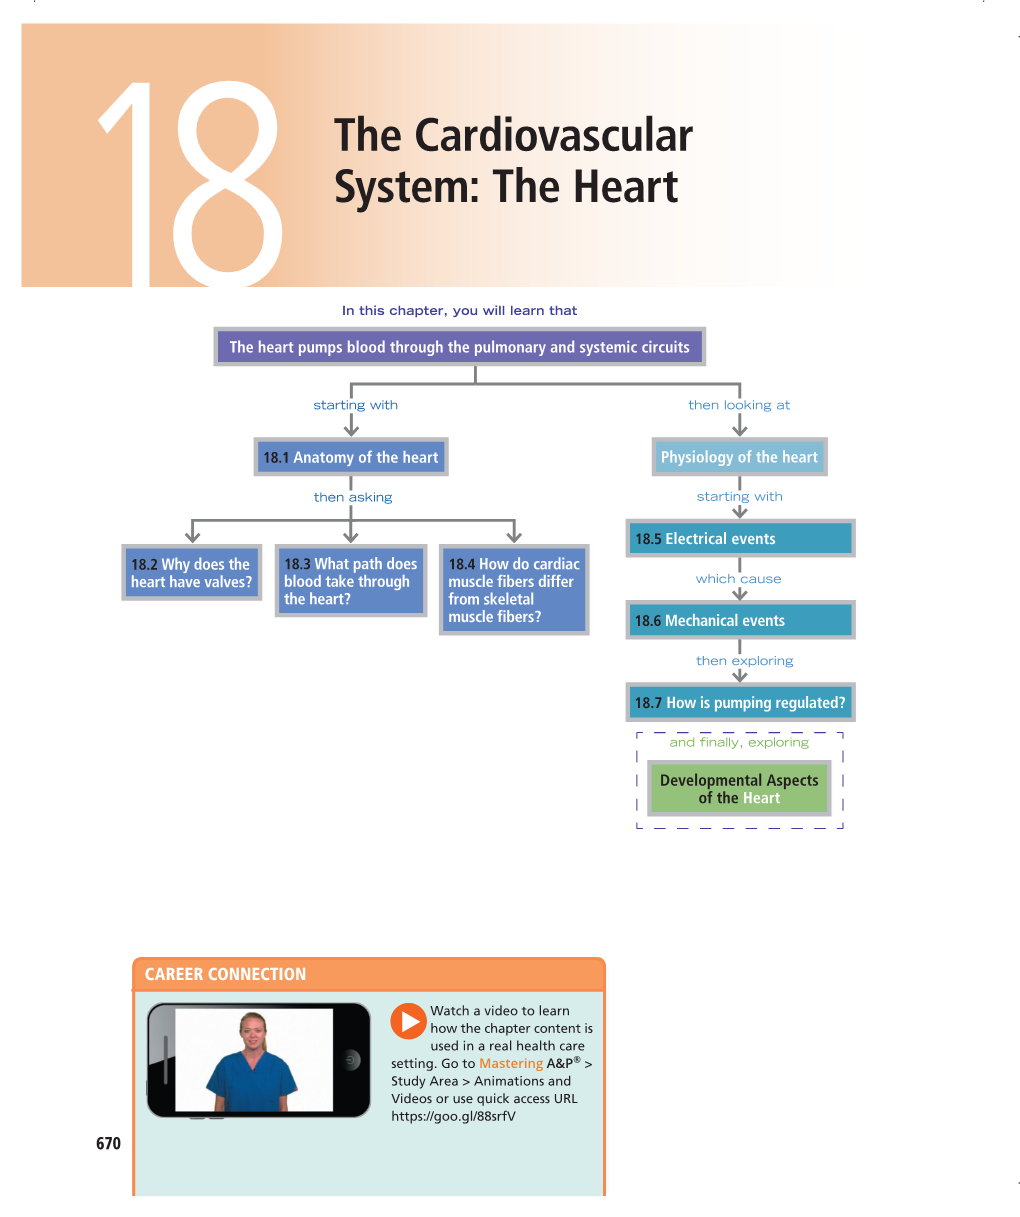 The Cardiovascular System: the Heart